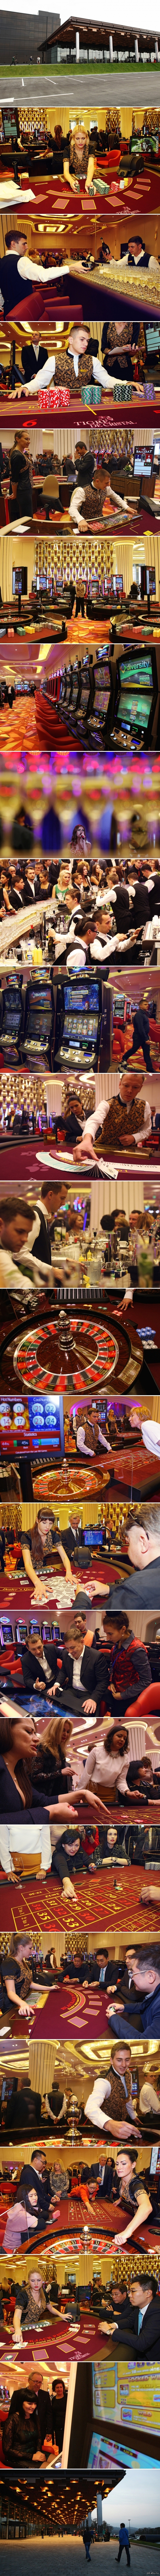 We have built our own casino. - My, Photo, Casino, Primorsky Krai, Gambling zone, Longpost